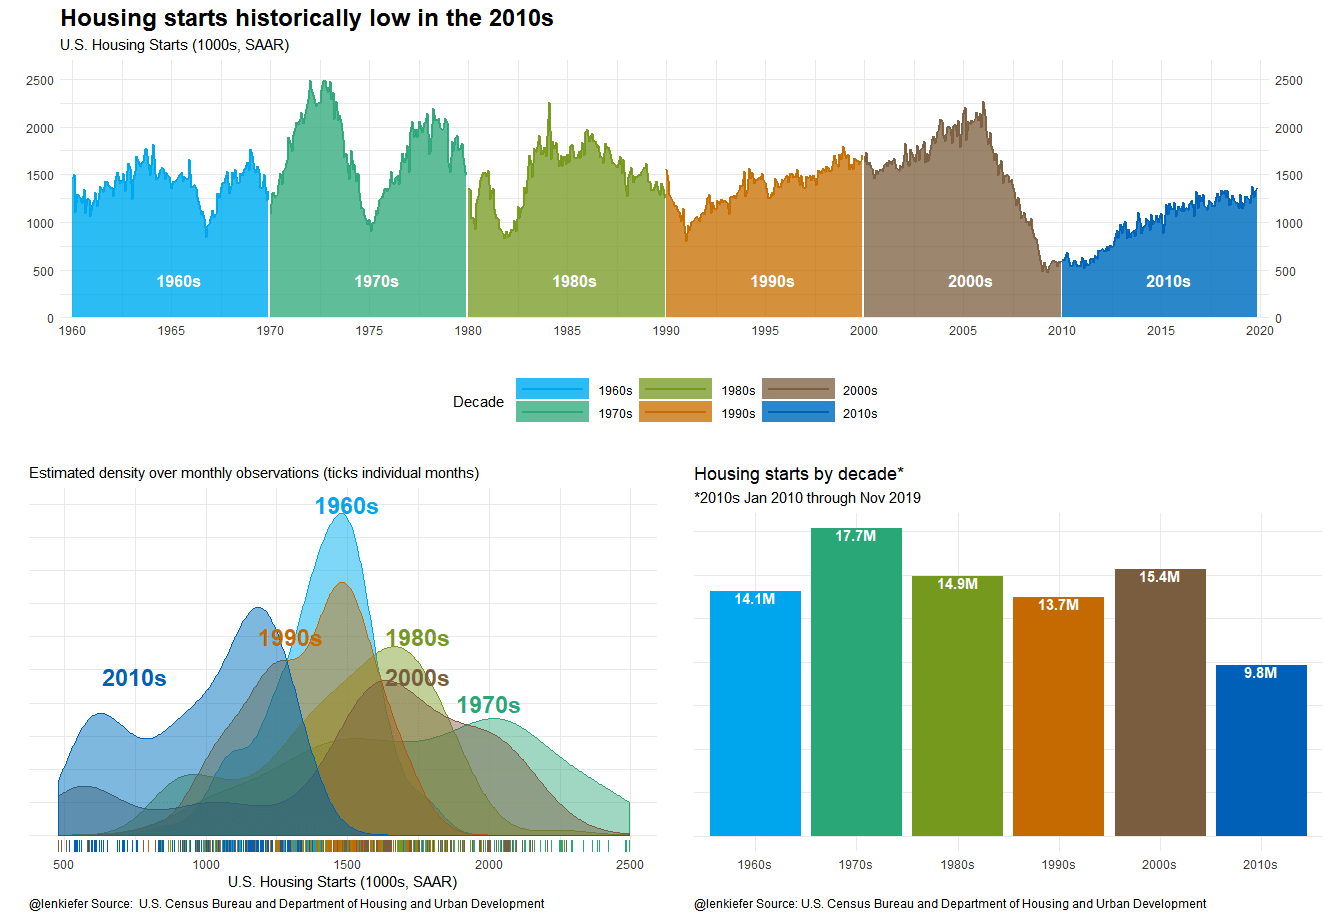 U.S. Housing Starts by Decade